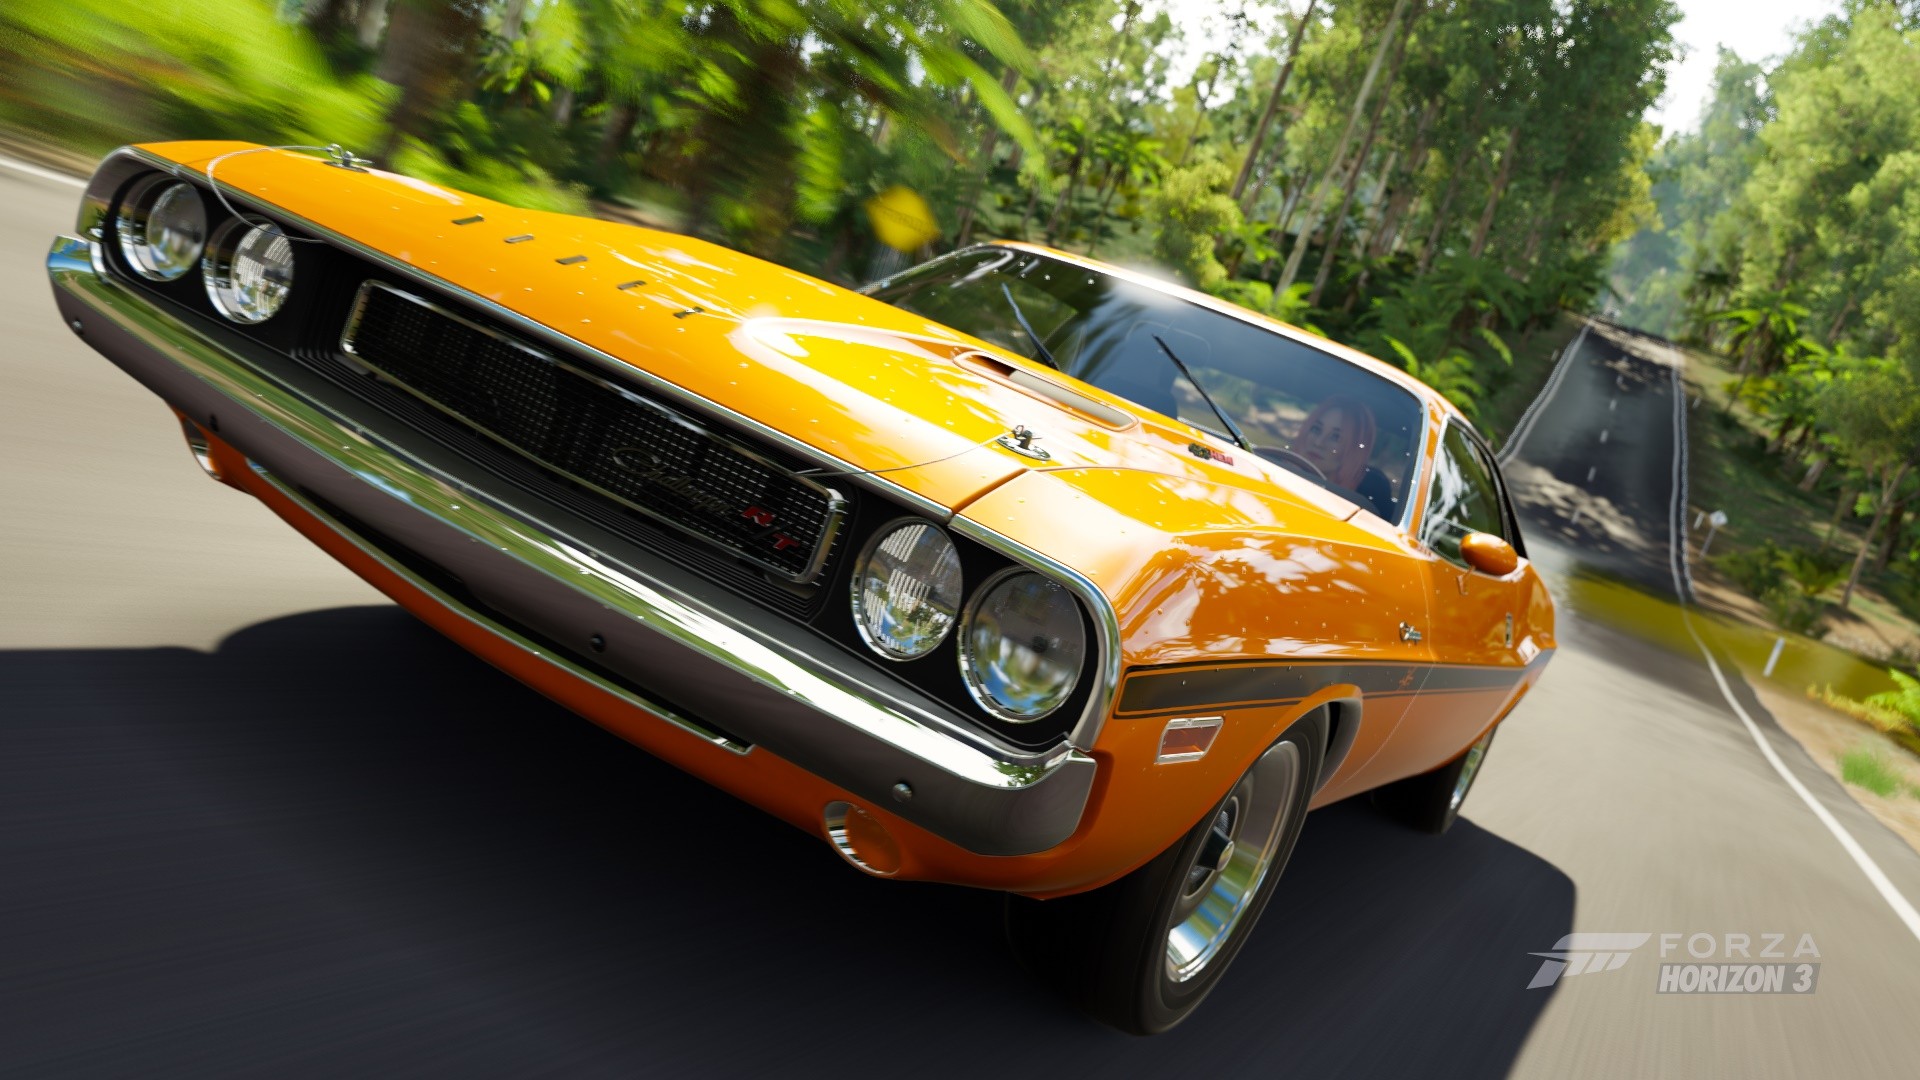 Wallpaper Dodge challenger car in forza horizon 3 video game